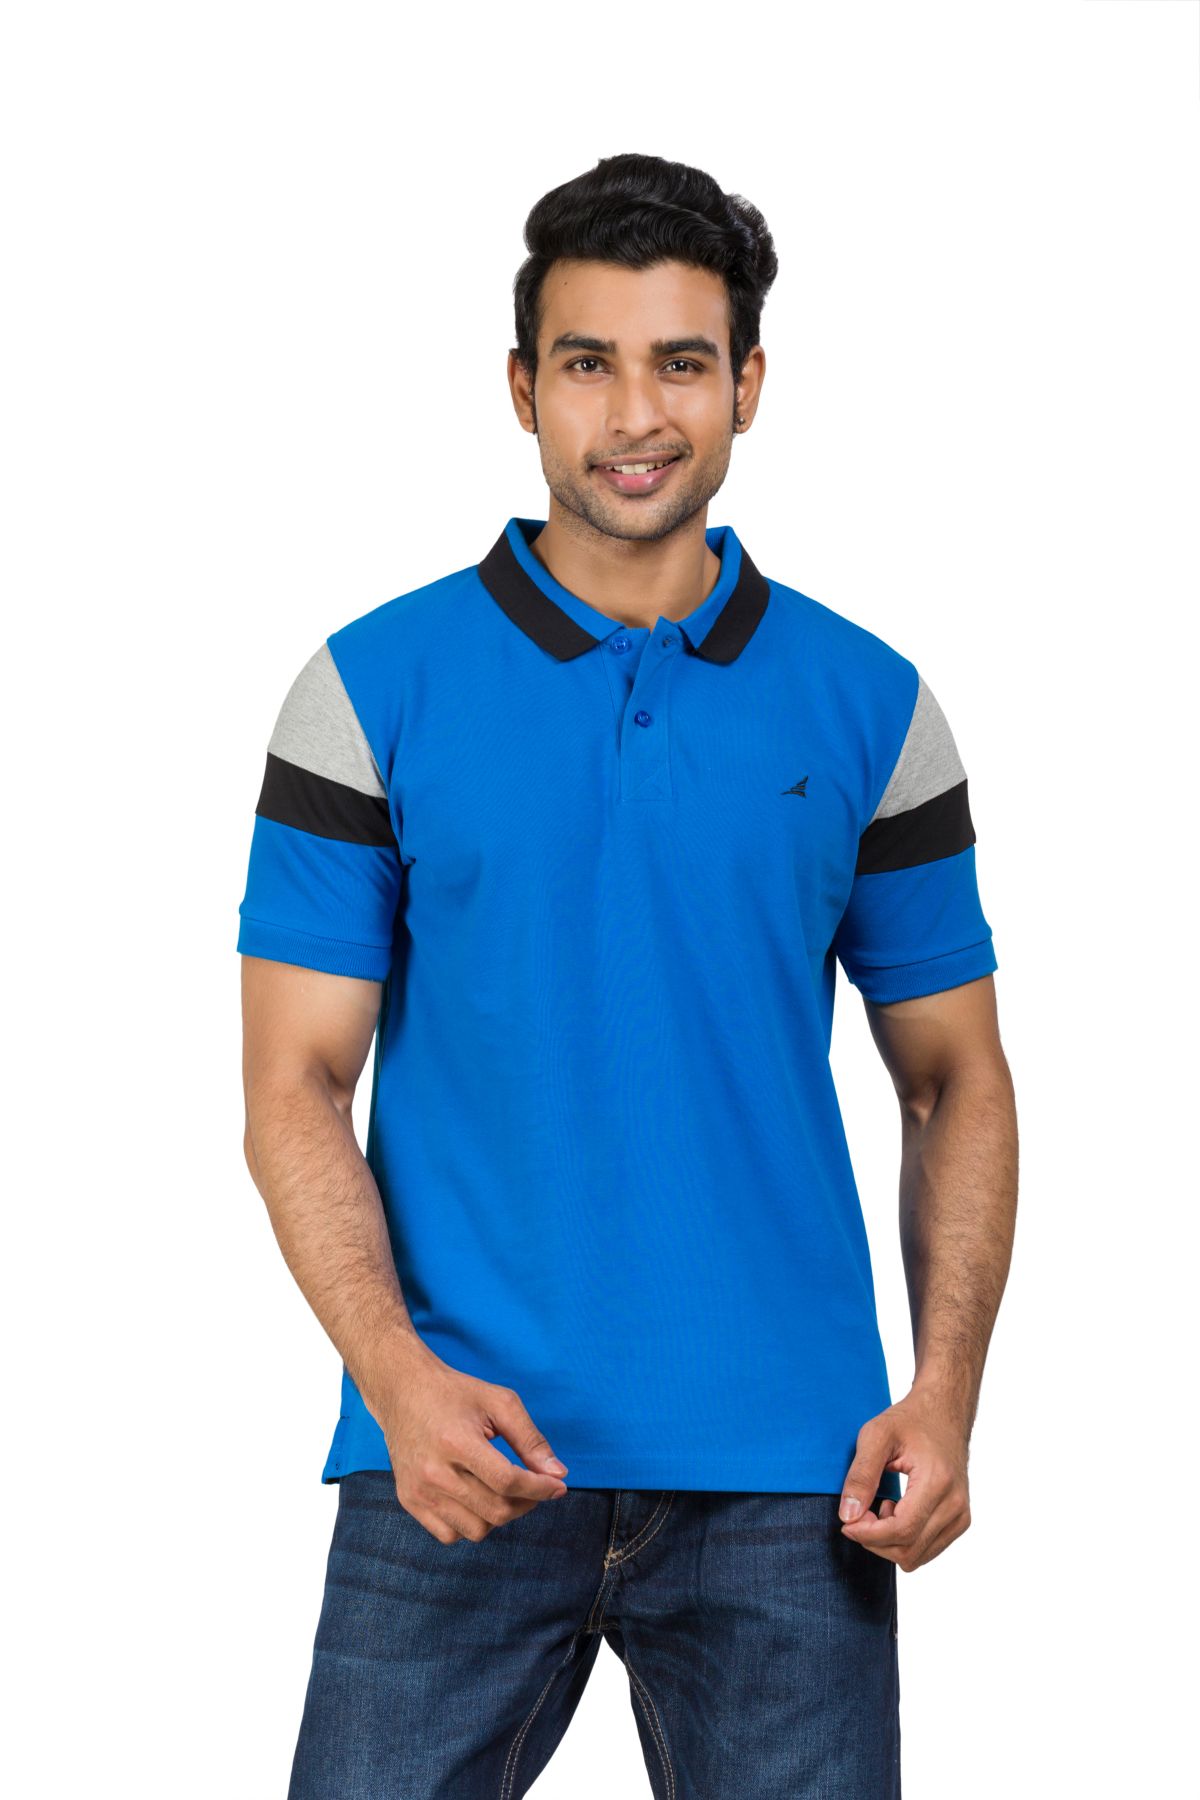 Cotton Blend Polo T-shirt Blue-Grey-Black For Men